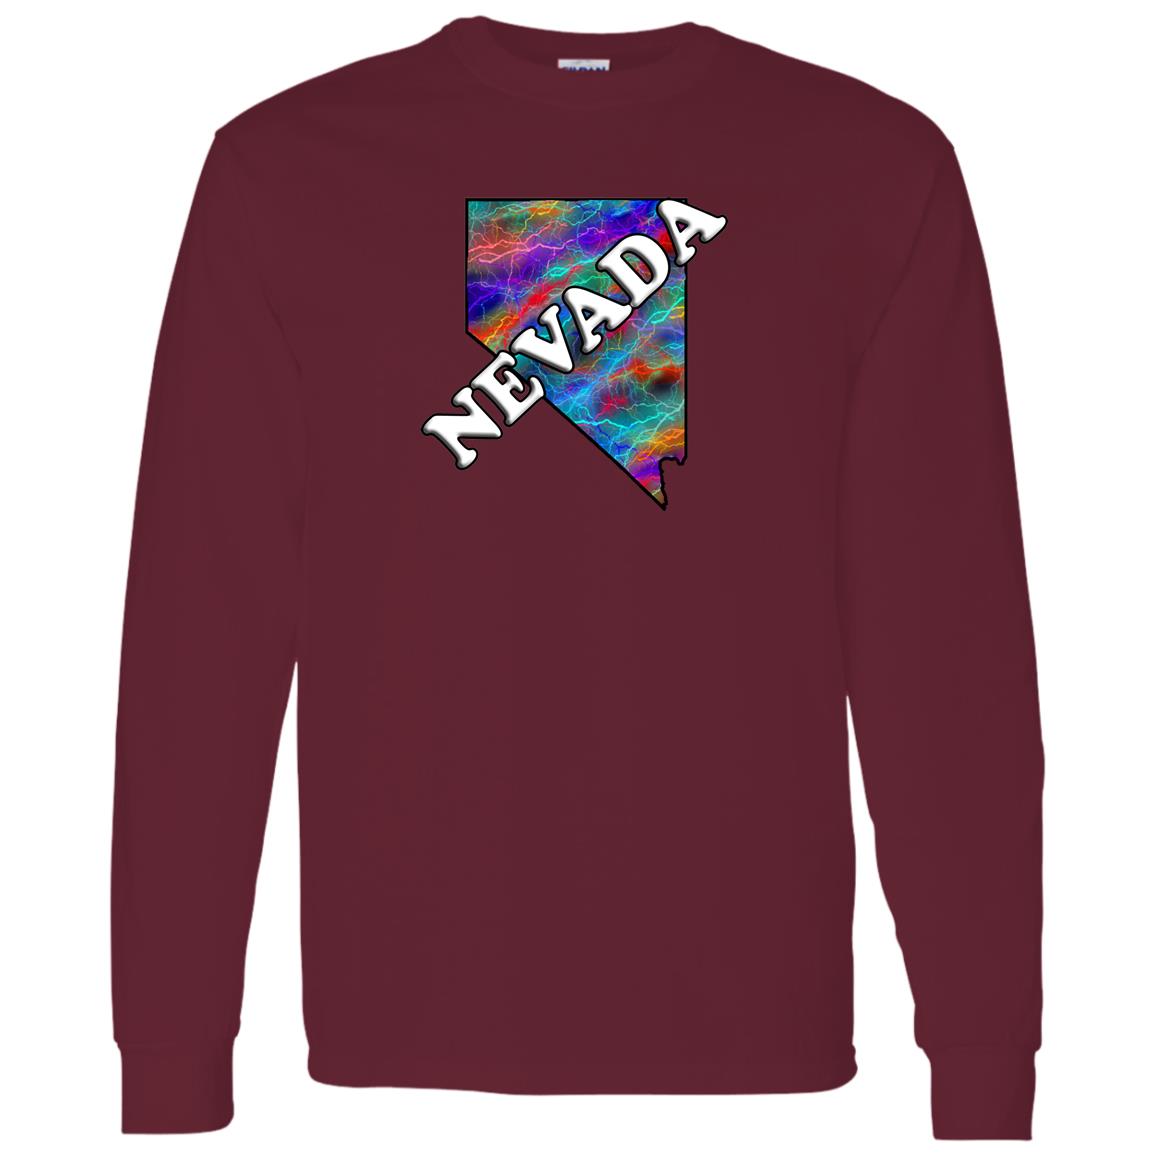 Nevada Long Sleeve State T-Shirt